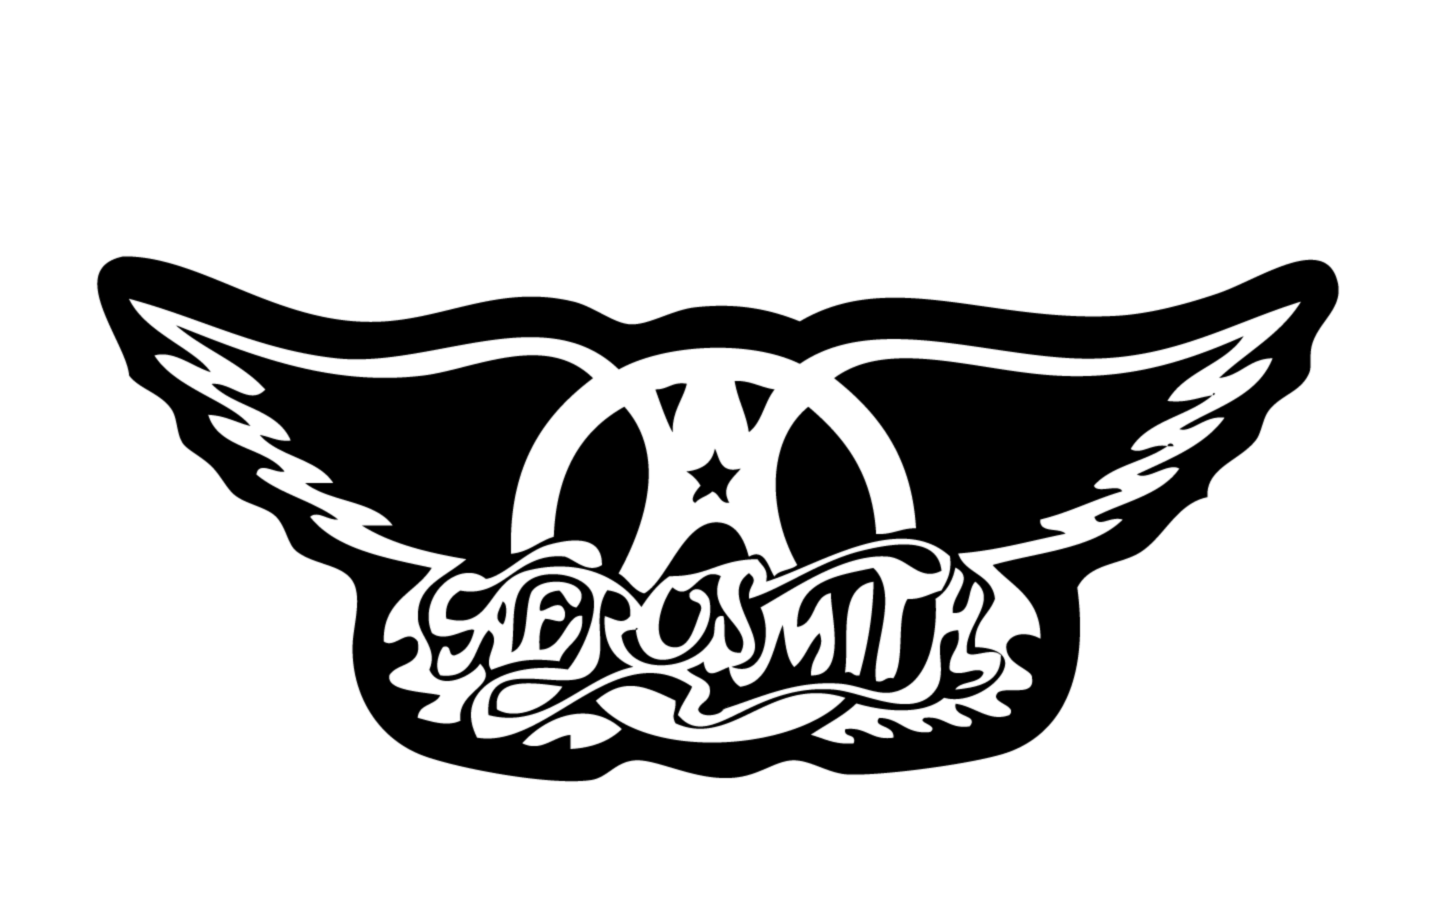 Aerosmith Record Vector PNG - 36802